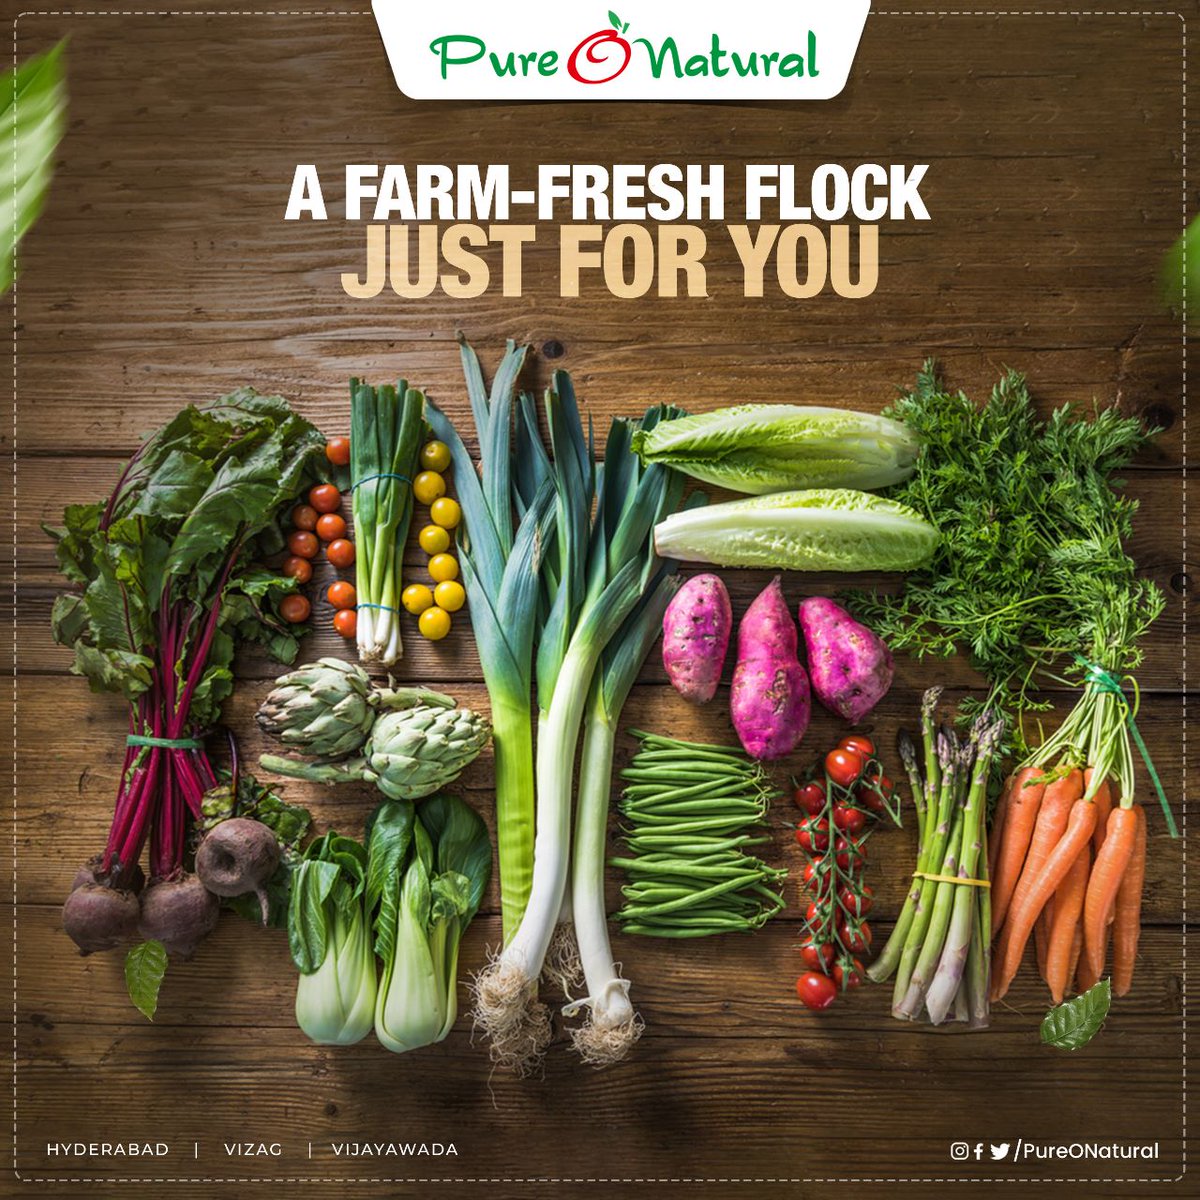 Get Your Set of Farm Fresh Flock from PureONatural near You 💚🌱

#PureONatural #Hyderabad #Vizag #Vijaywada #FarmFresh #FreshFruits #FreshVegetables #Healthy #HealthyEating